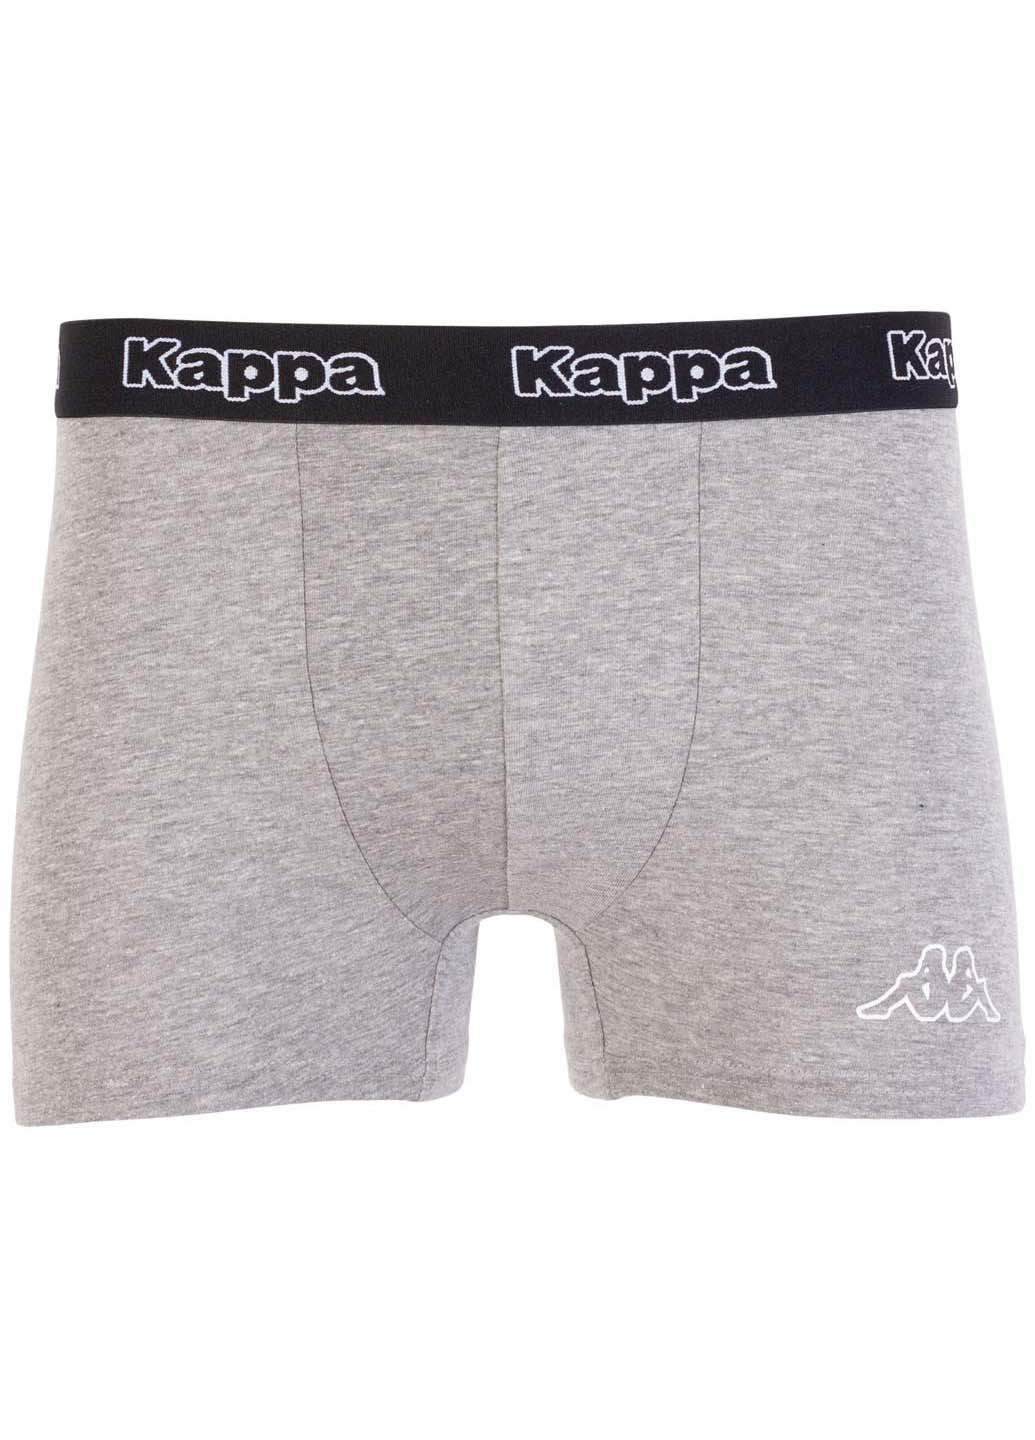 Трусы Kappa Men's Boxer 2-pack боксеры серые хлопок